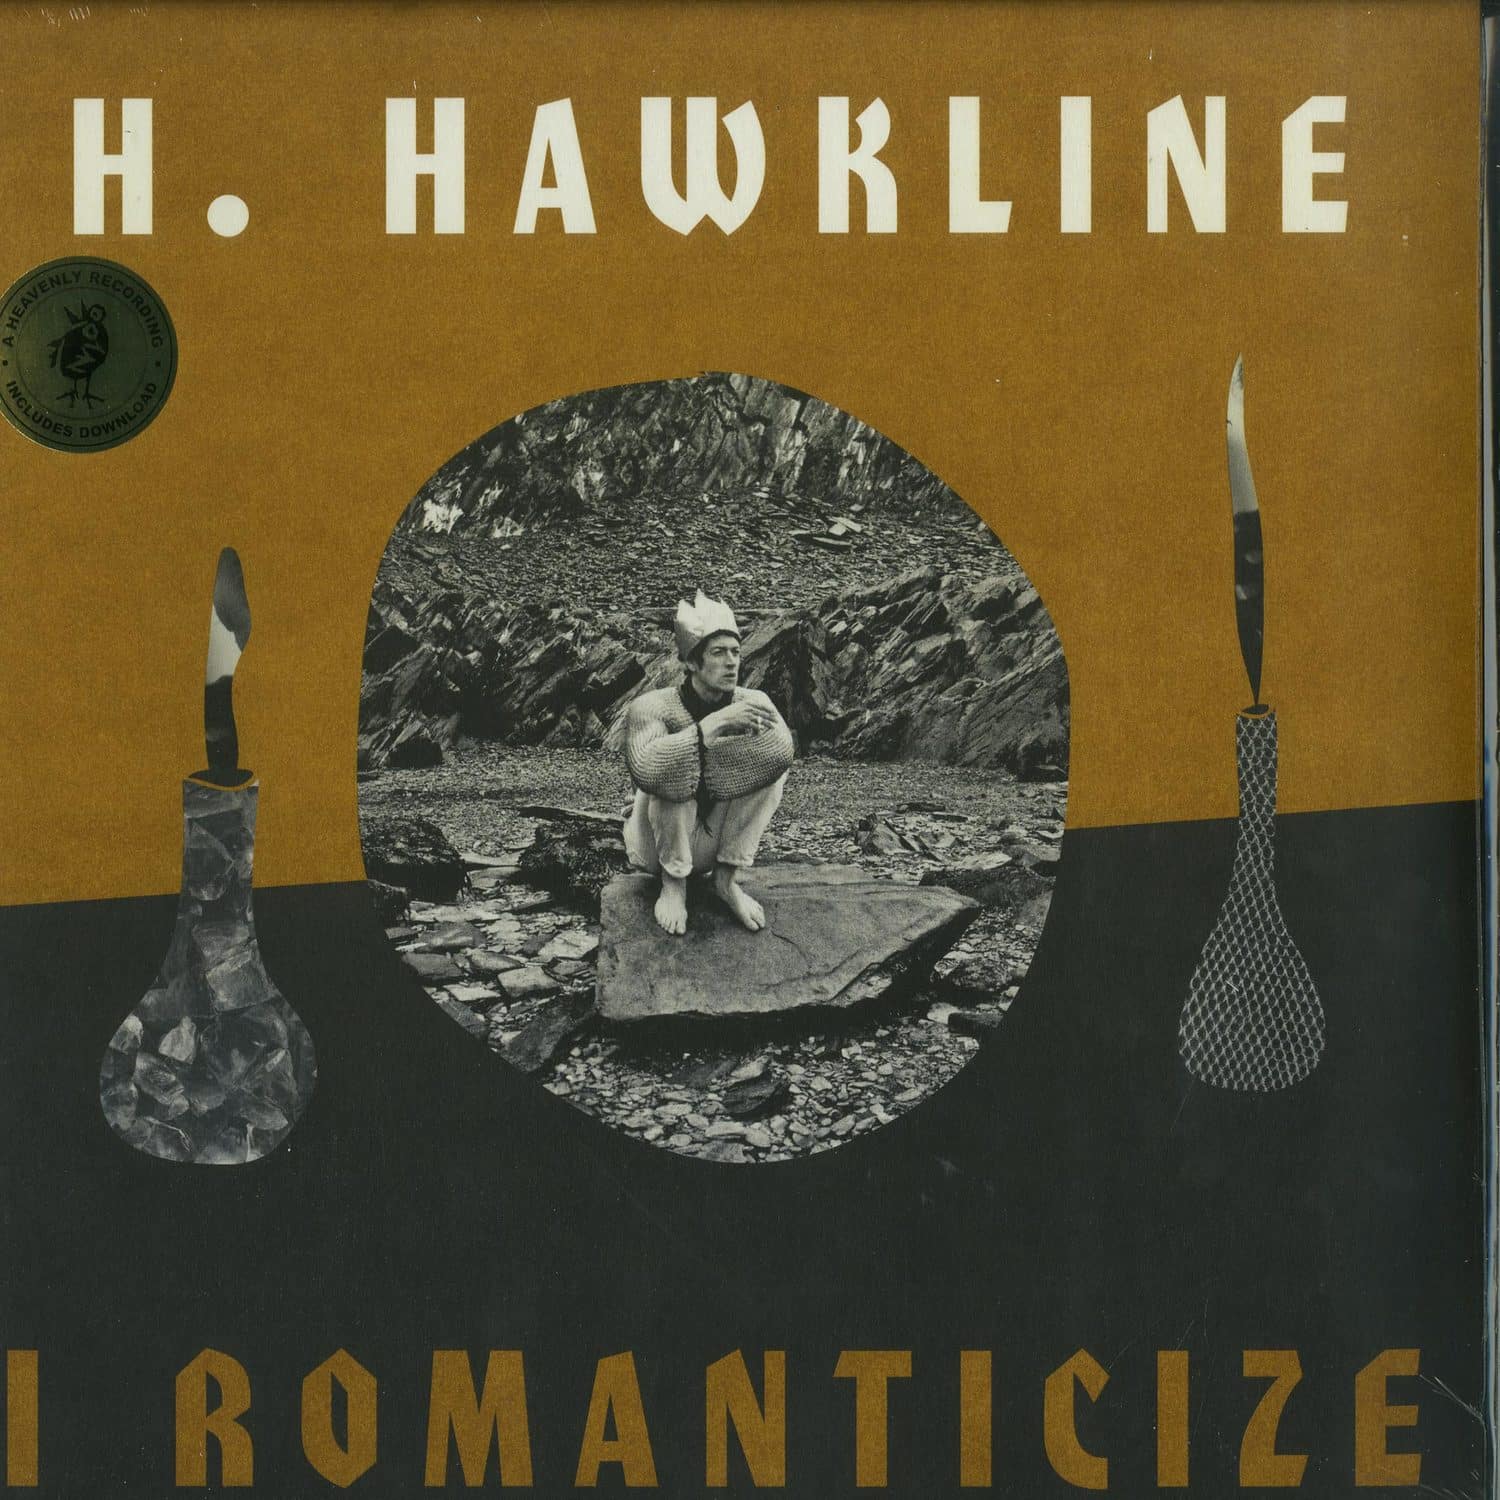 H. Hawkline - I ROMANTICIZE 